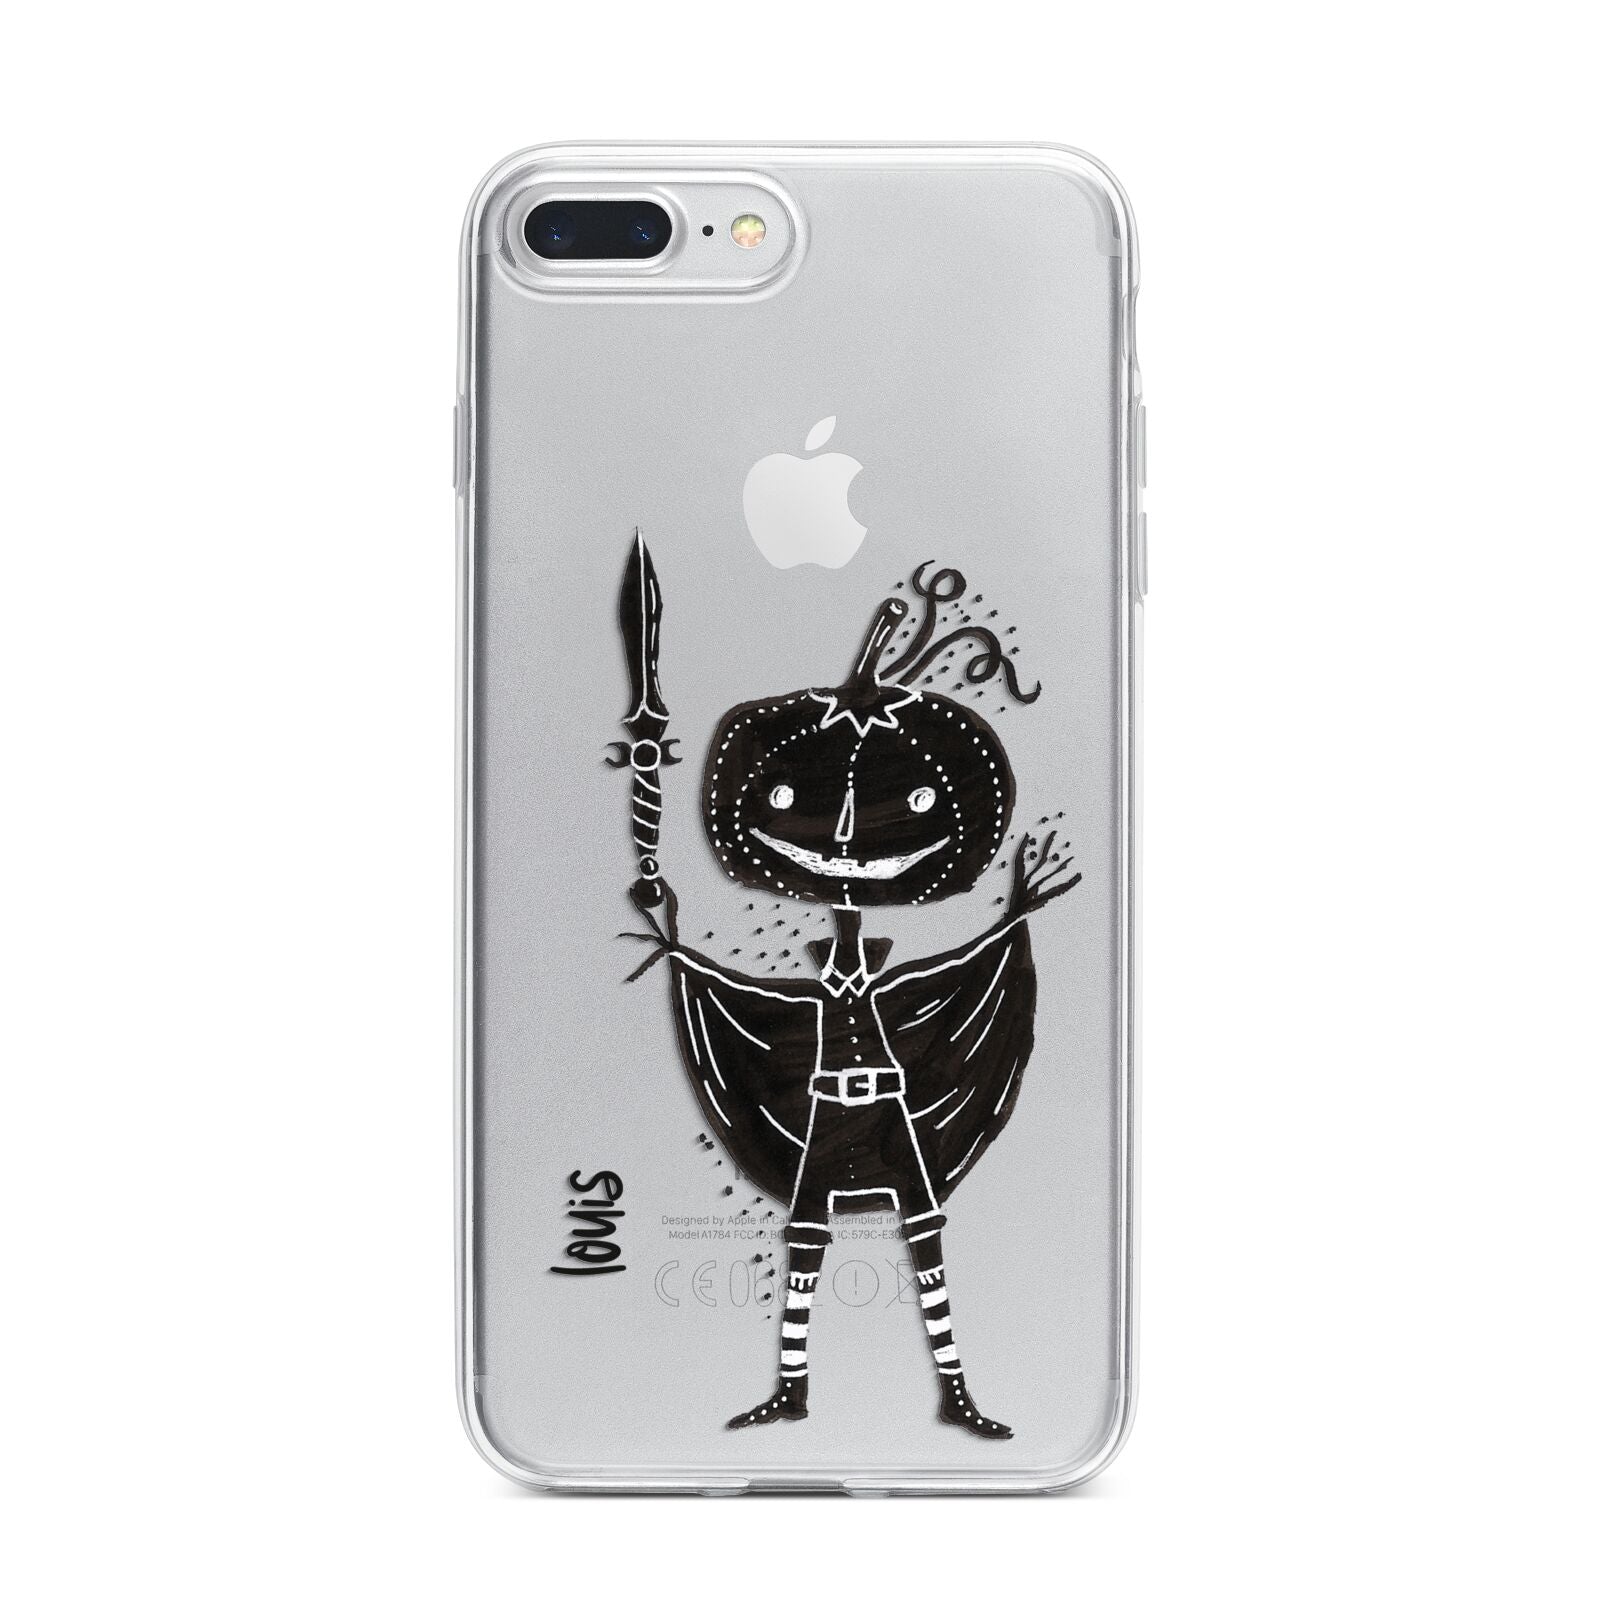 Pumpkin Head Personalised iPhone 7 Plus Bumper Case on Silver iPhone